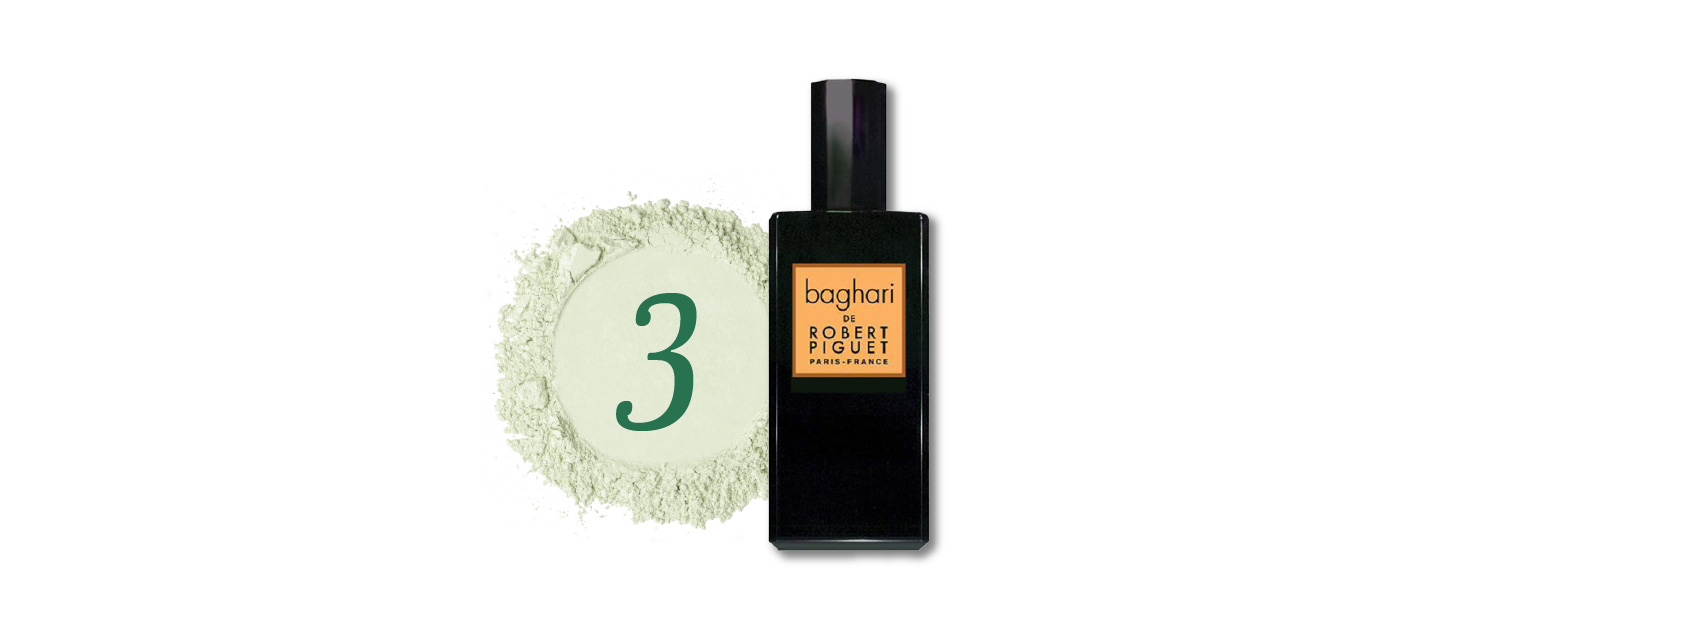 bottle of baghari perfume by robert piguet number 3 powdery scent